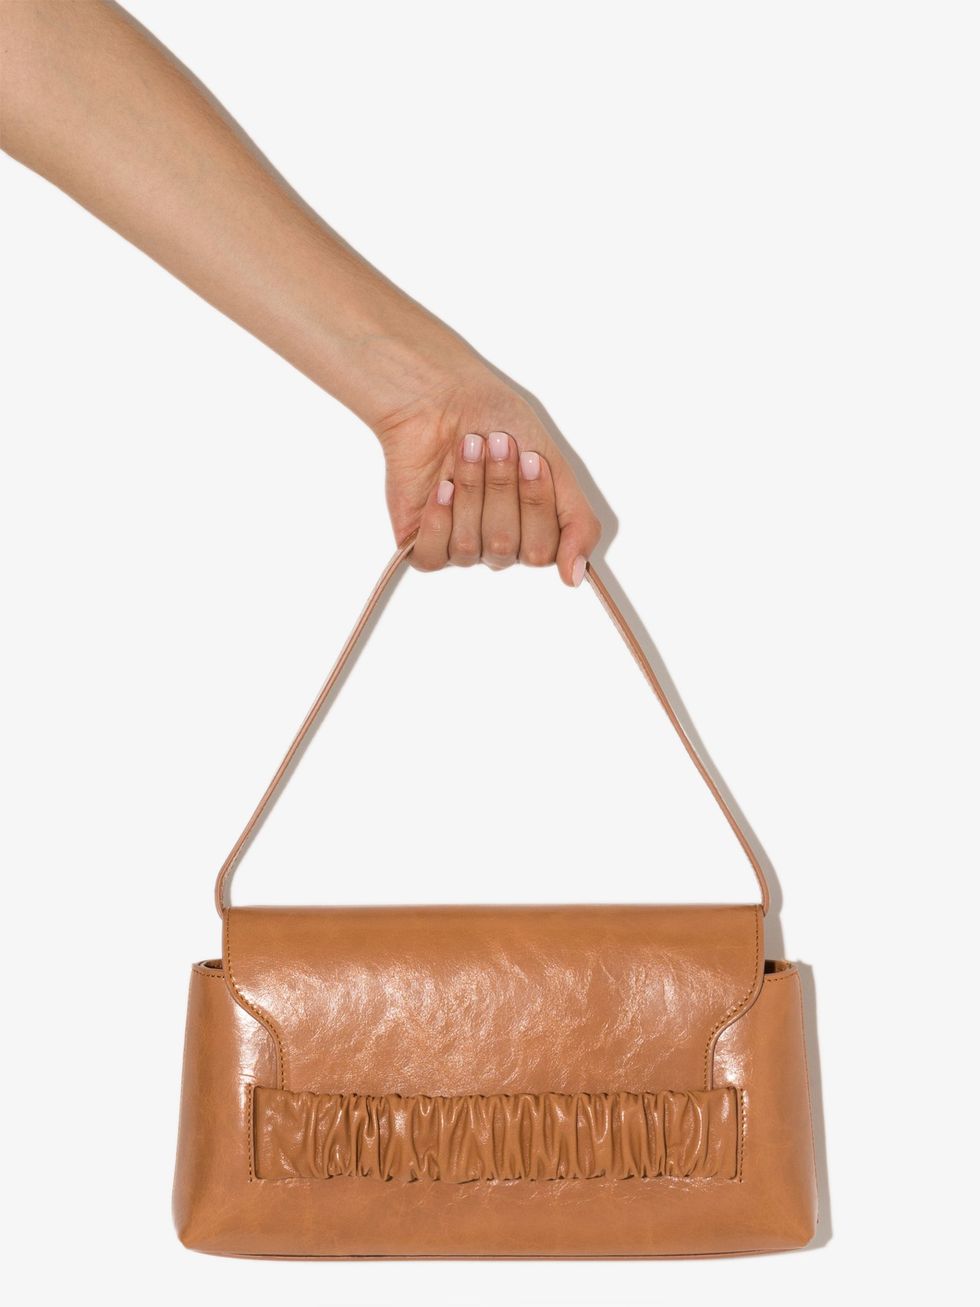 JW PEI Rantan Bag  Leather bag design, Leather bags handmade